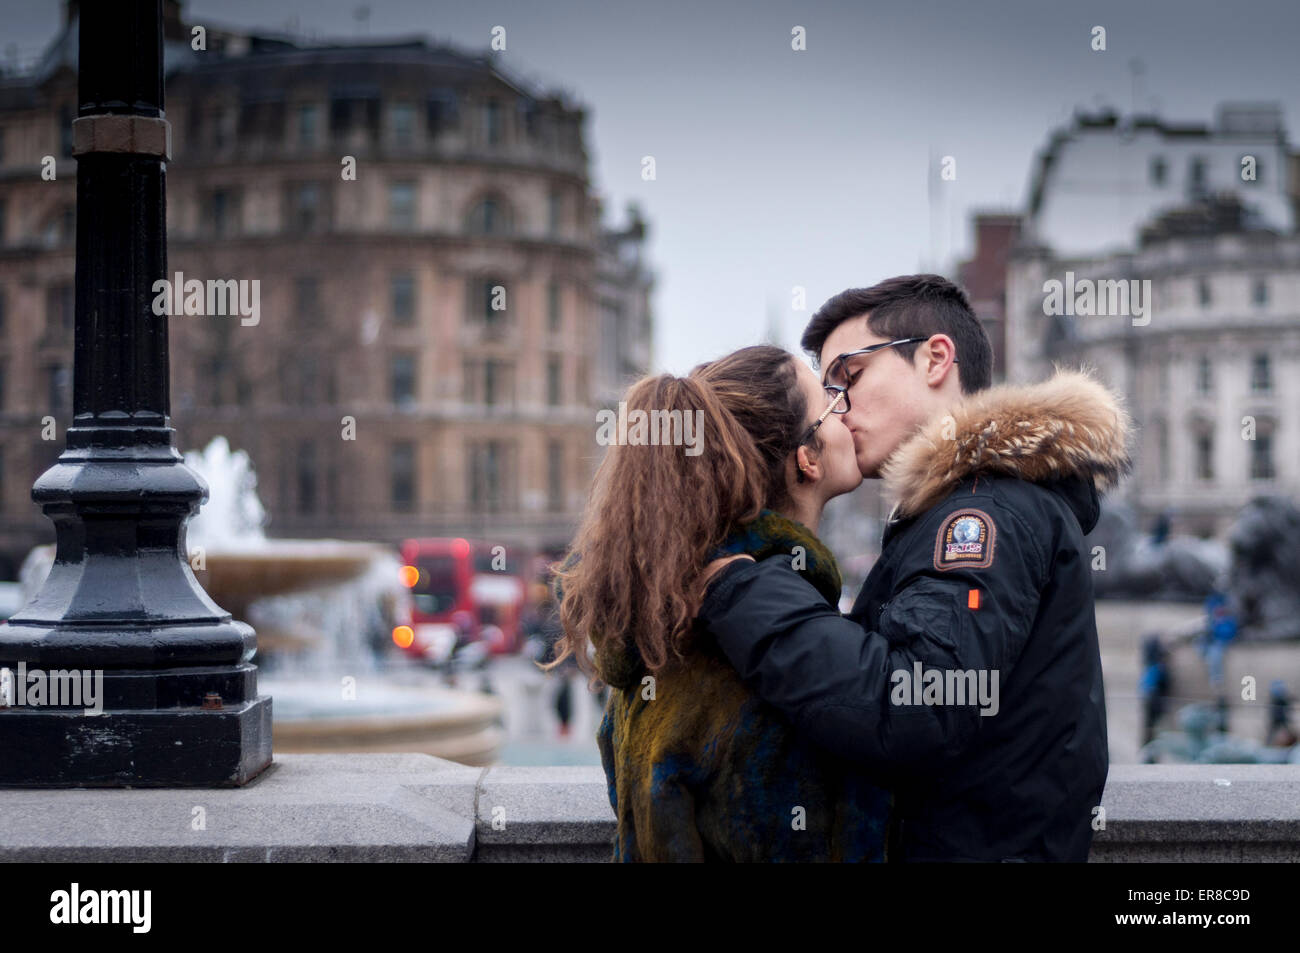 Junge liebende küssen auf dem Trafalgar Square, London, UK Stockfoto